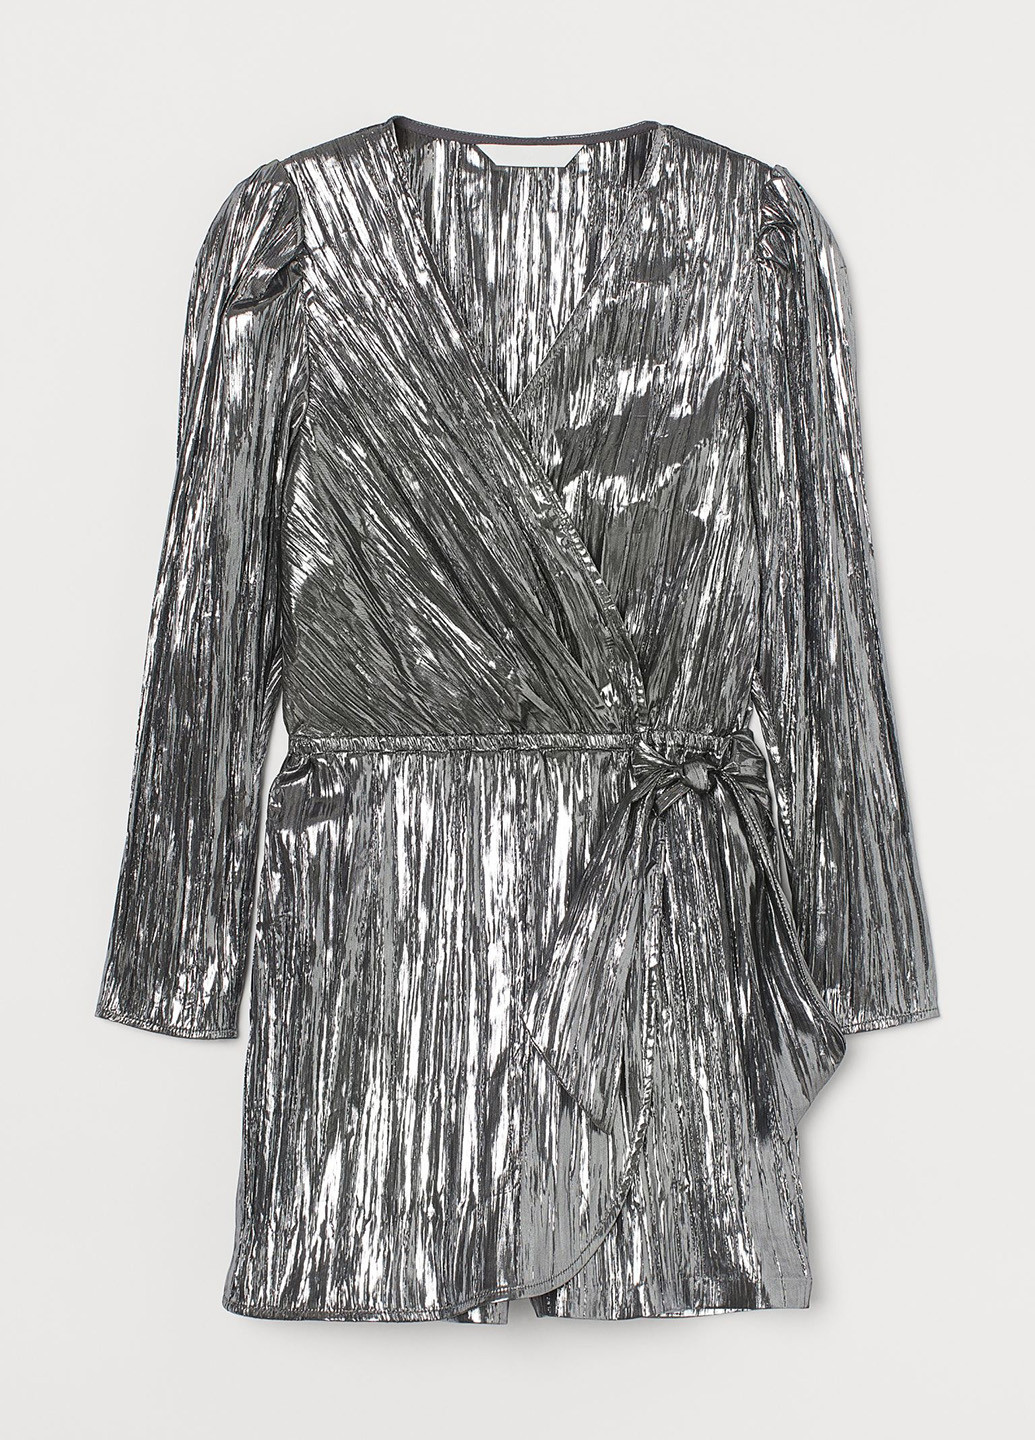 Комбинезон H&M комбинезон-шорты однотонный серебряный коктейльный полиамид